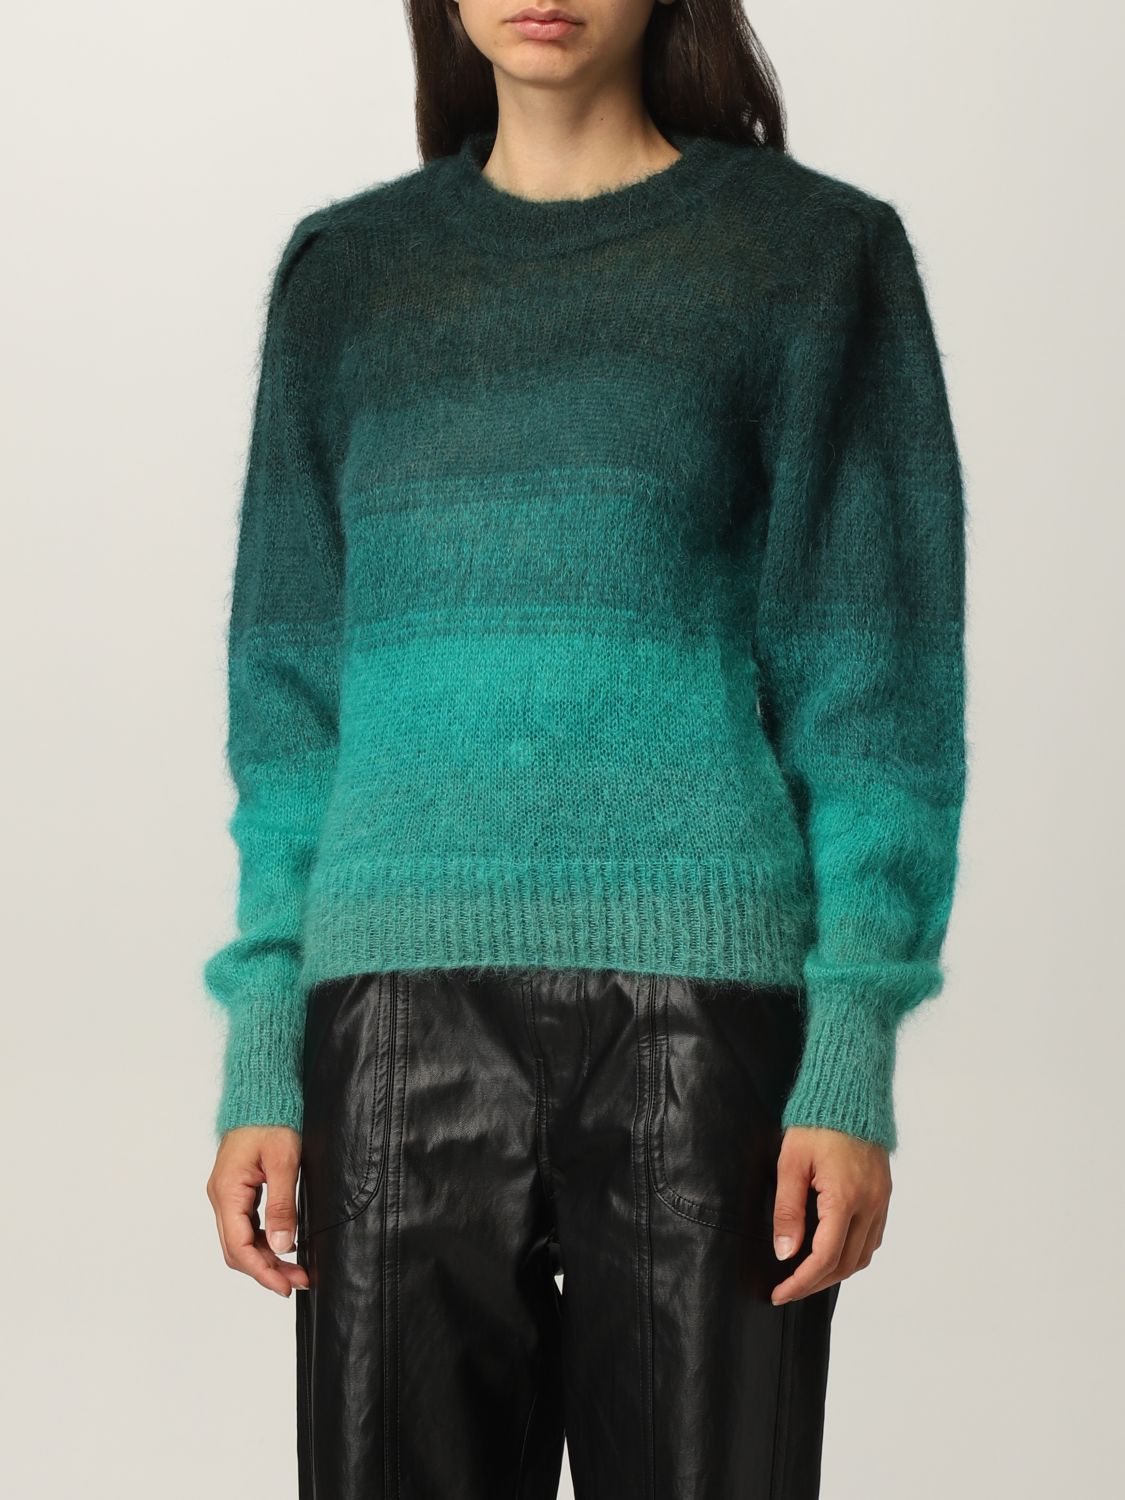 ISABEL MARANT ETOILE: sweater in mohair blend - Green | Marant Etoile sweater PU164521A049E online on GIGLIO.COM